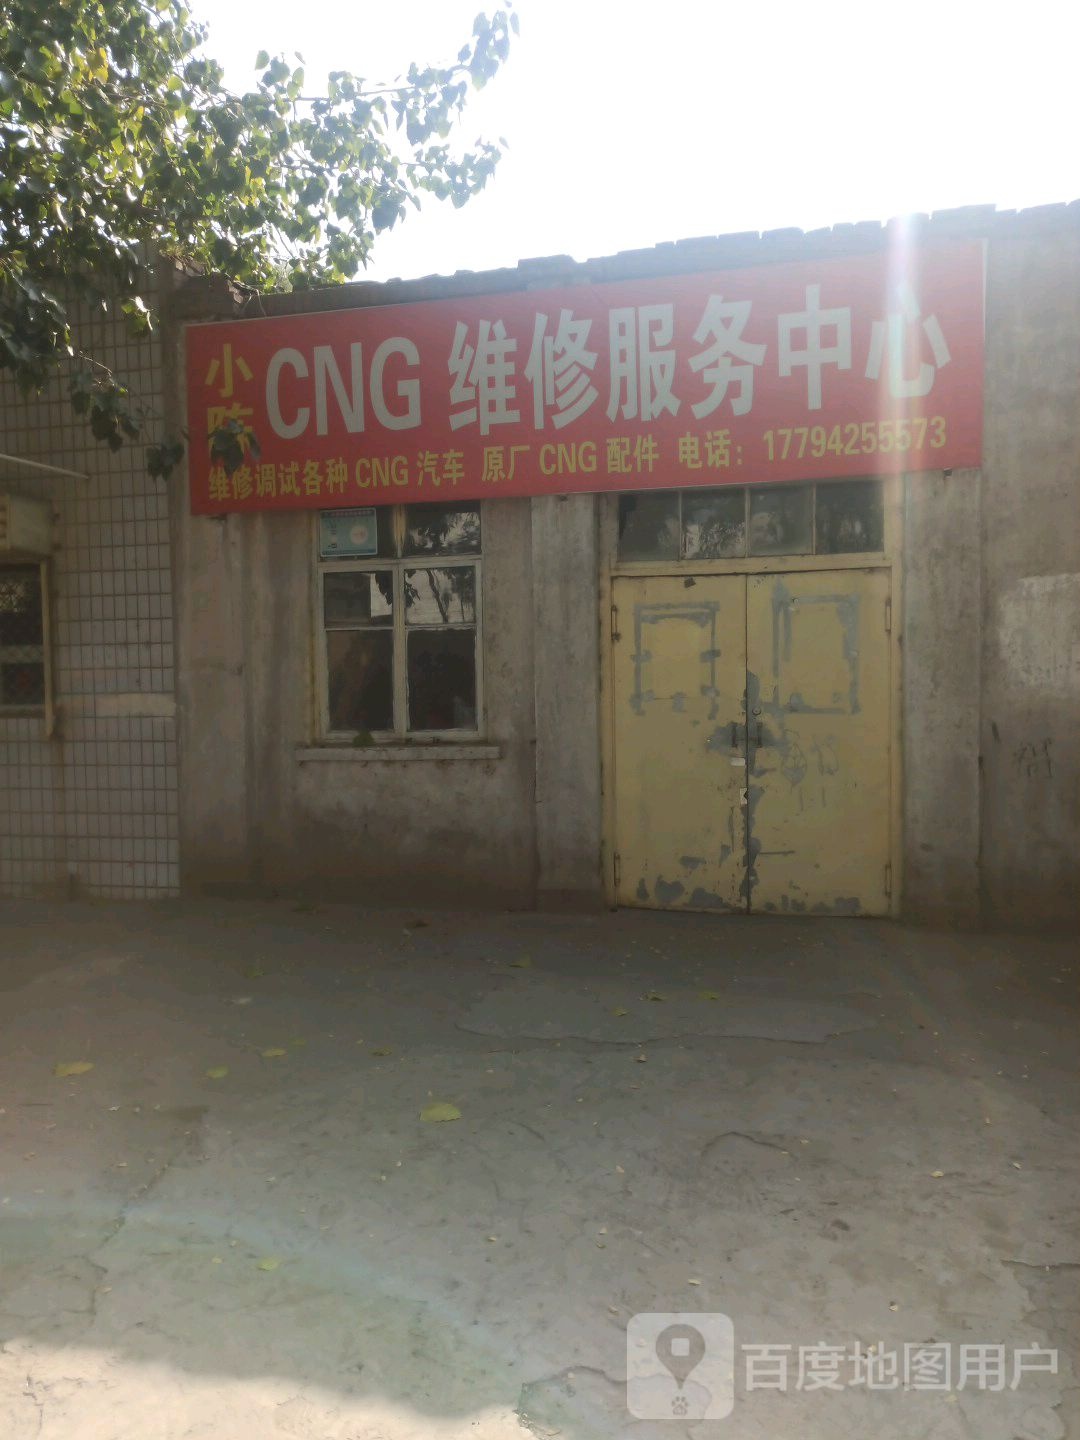 cng服务中心